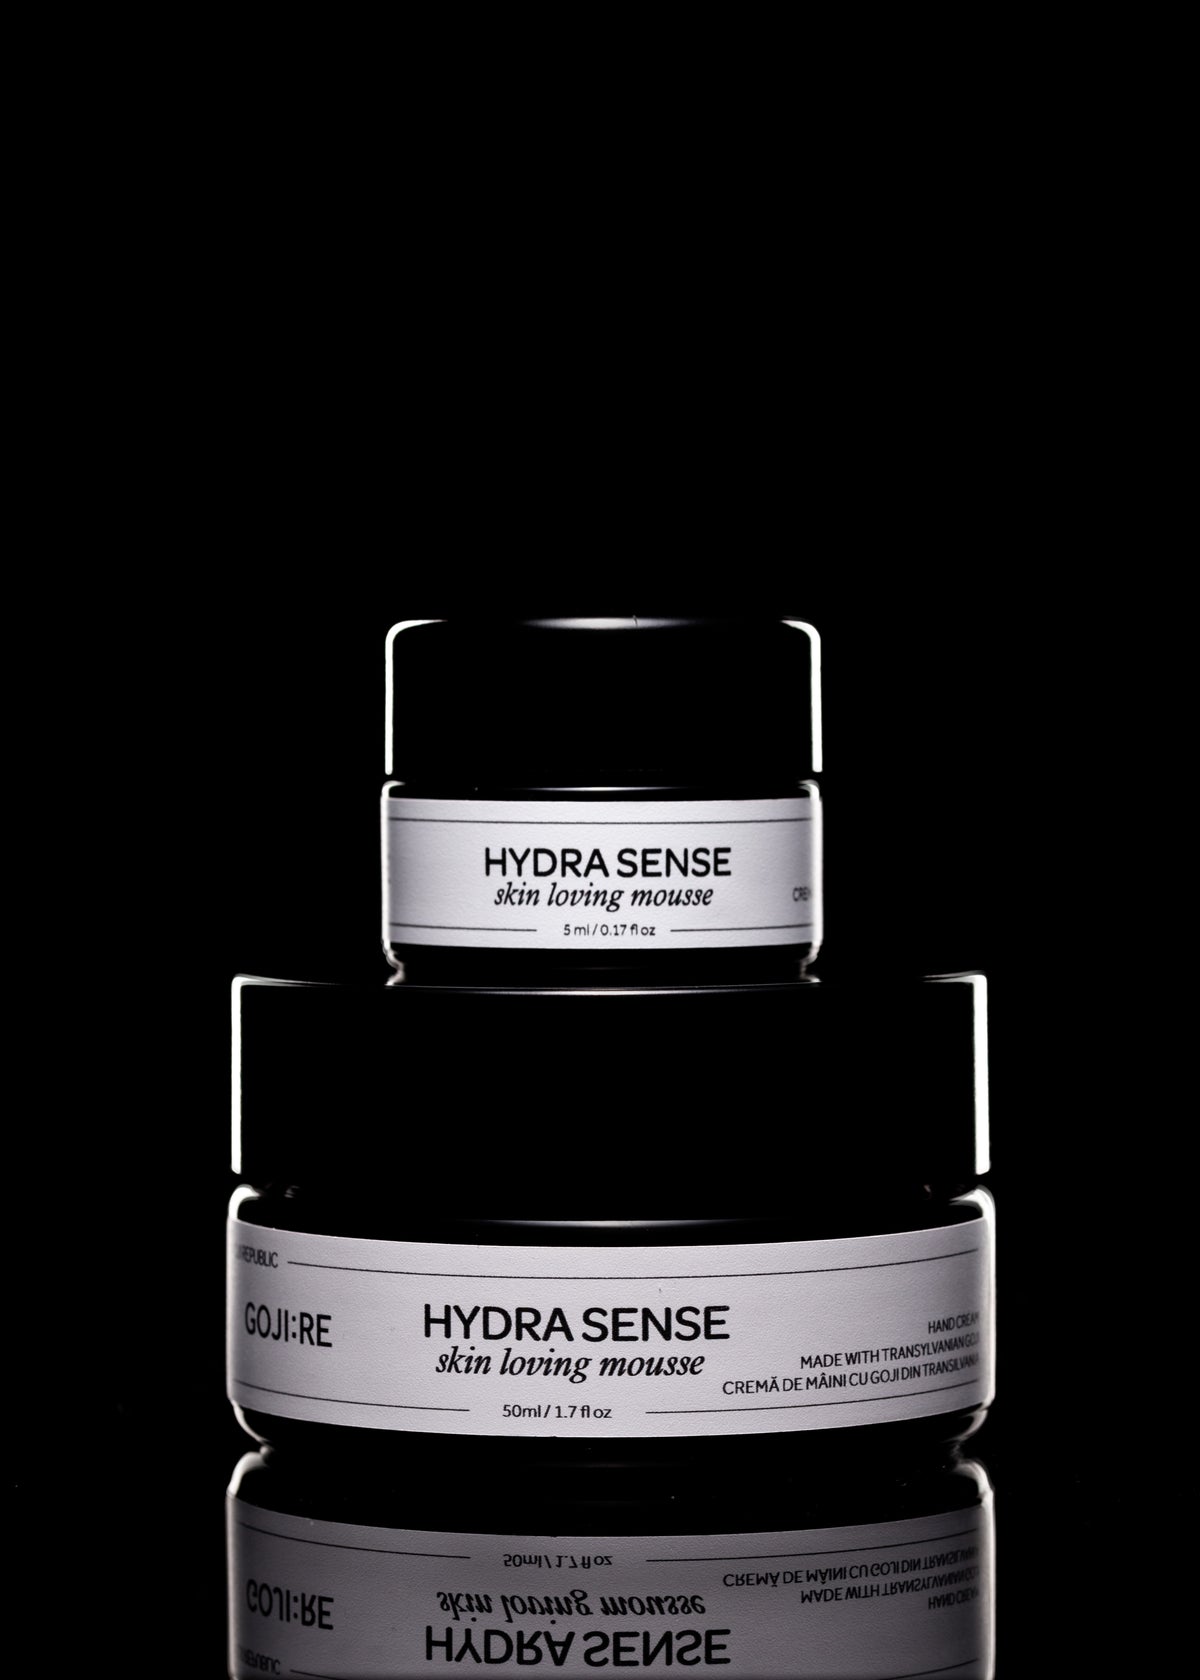 Hydra Sense Glow Reveal- 10 Day Trial Pack